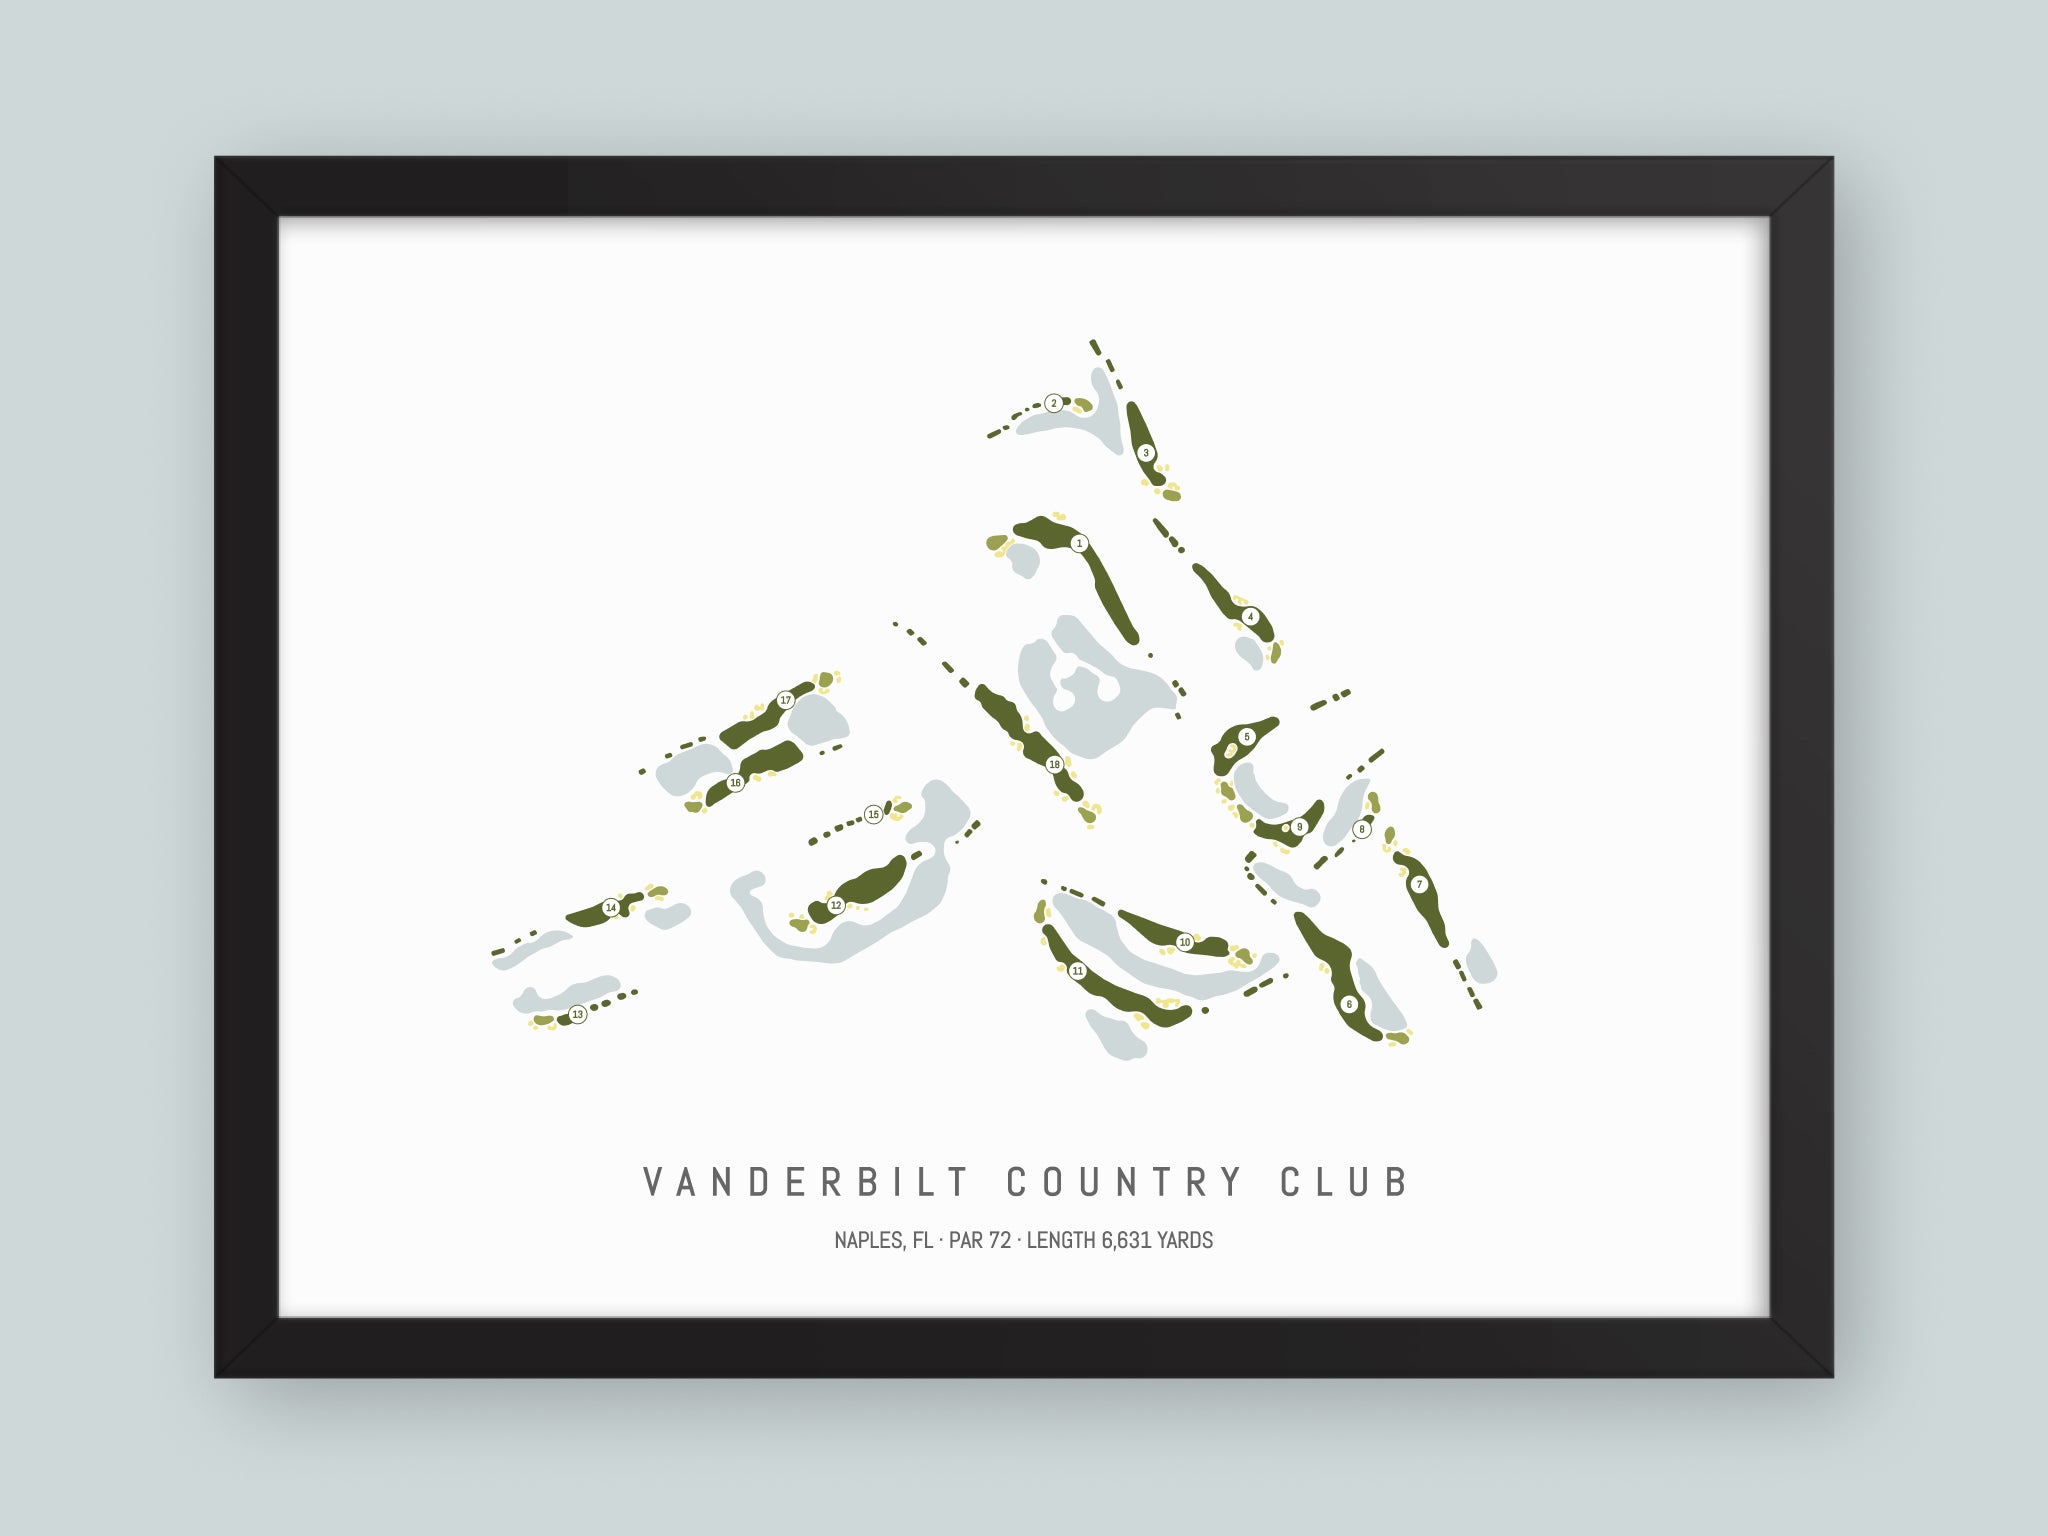 Vanderbilt-Country-Club-FL--Black-Frame-24x18-With-Hole-Numbers